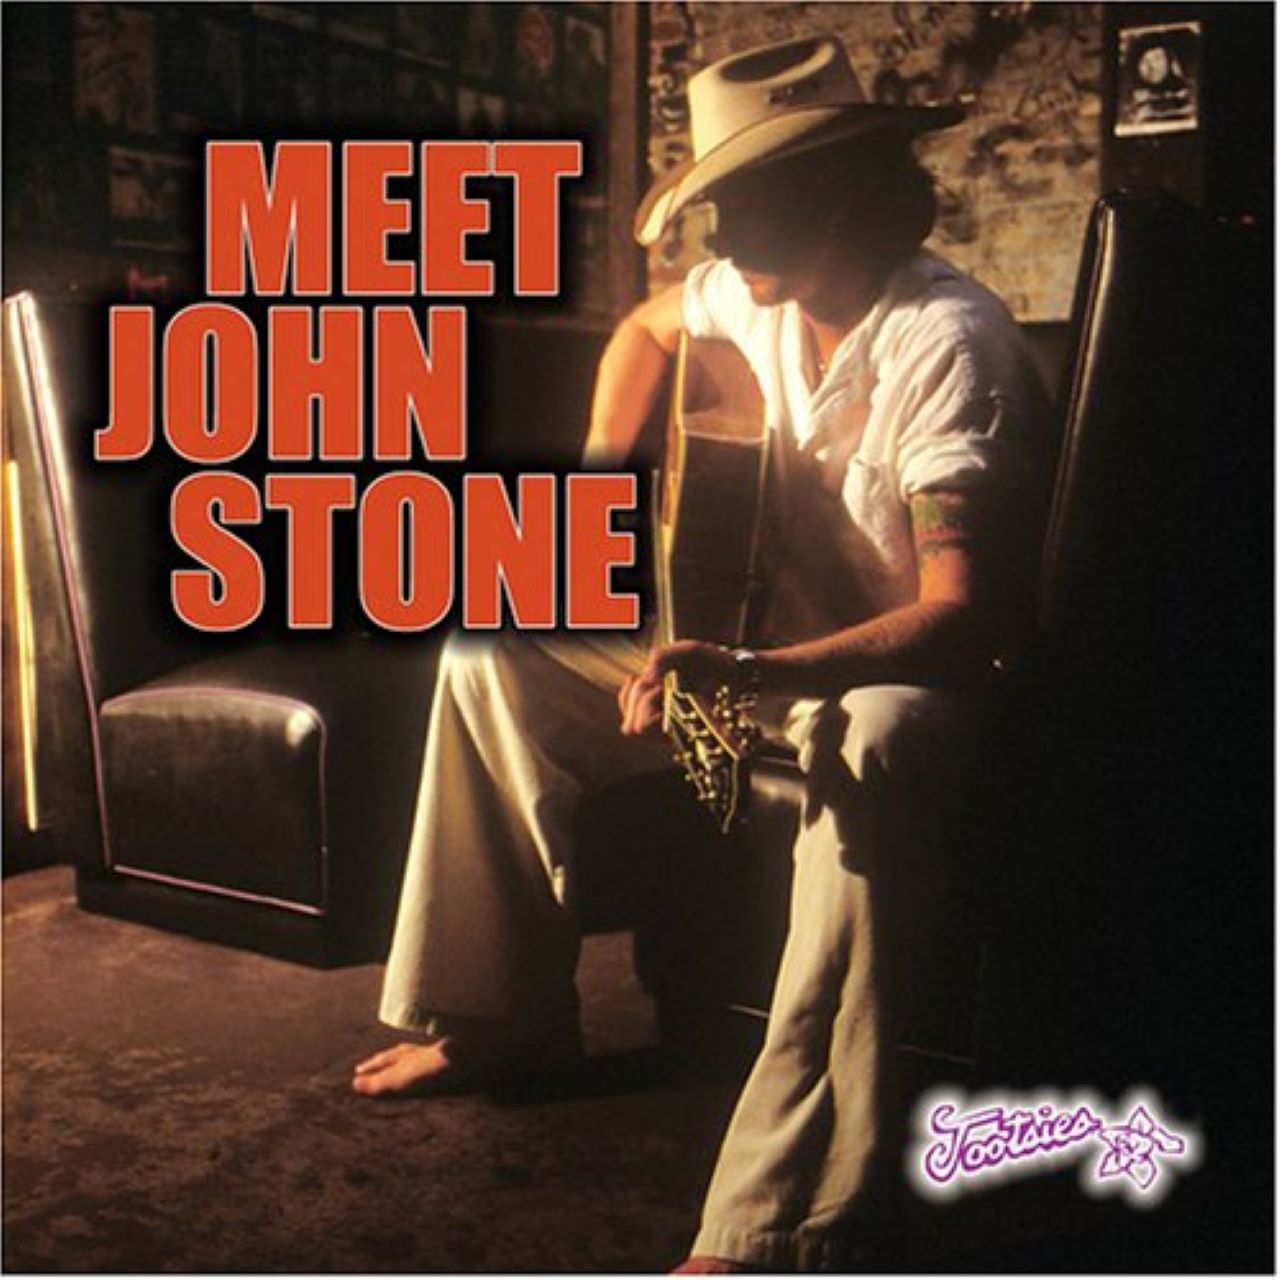 John Stone - Meet John Stone cover album